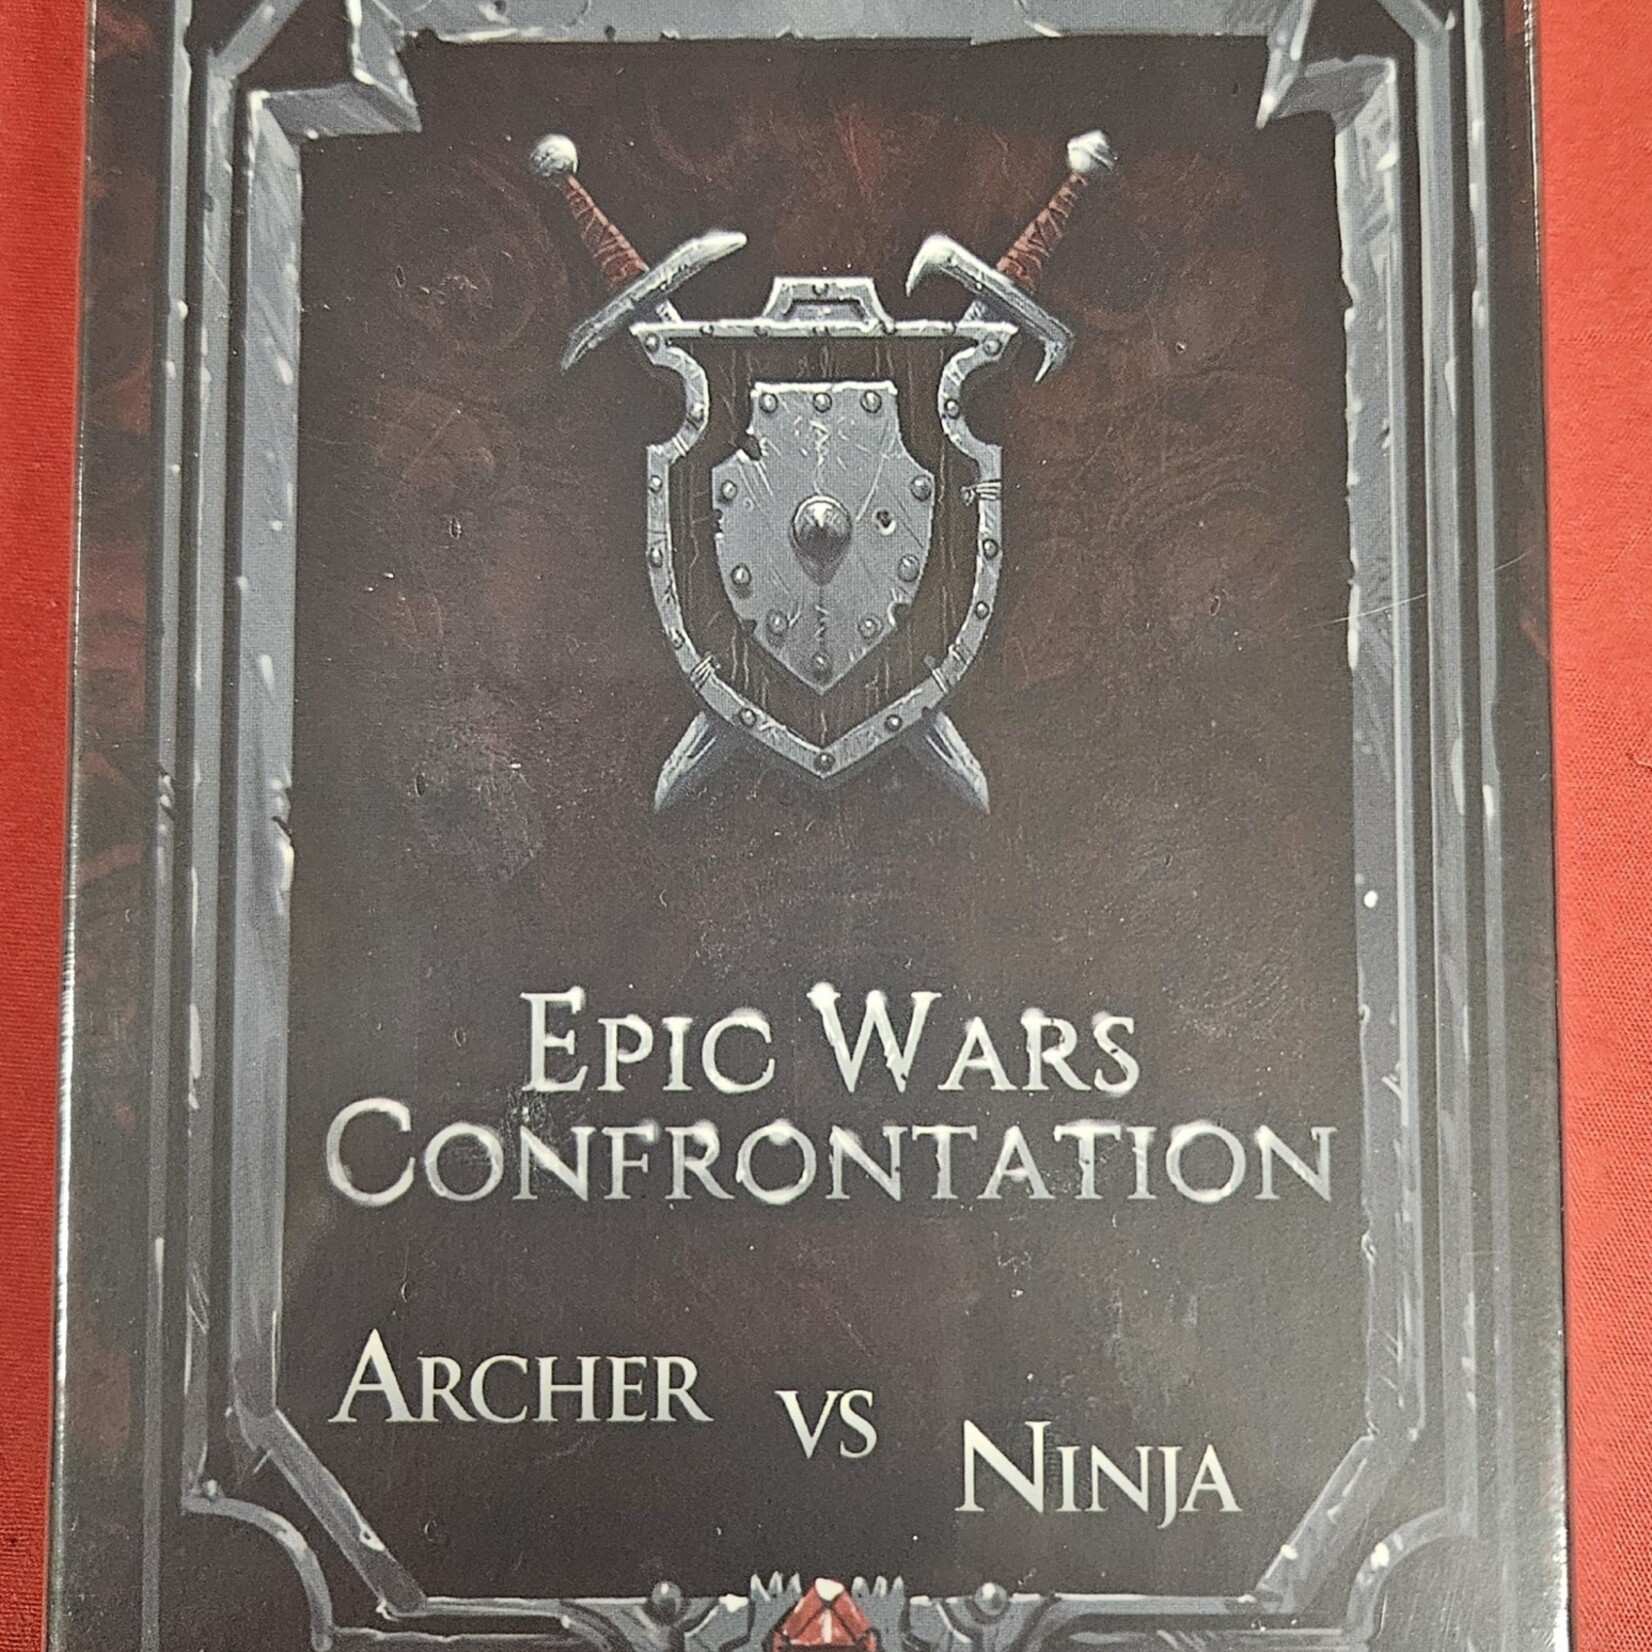 Epic Wars Confrontation Epic Wars Confrontation - Archer vs Ninja